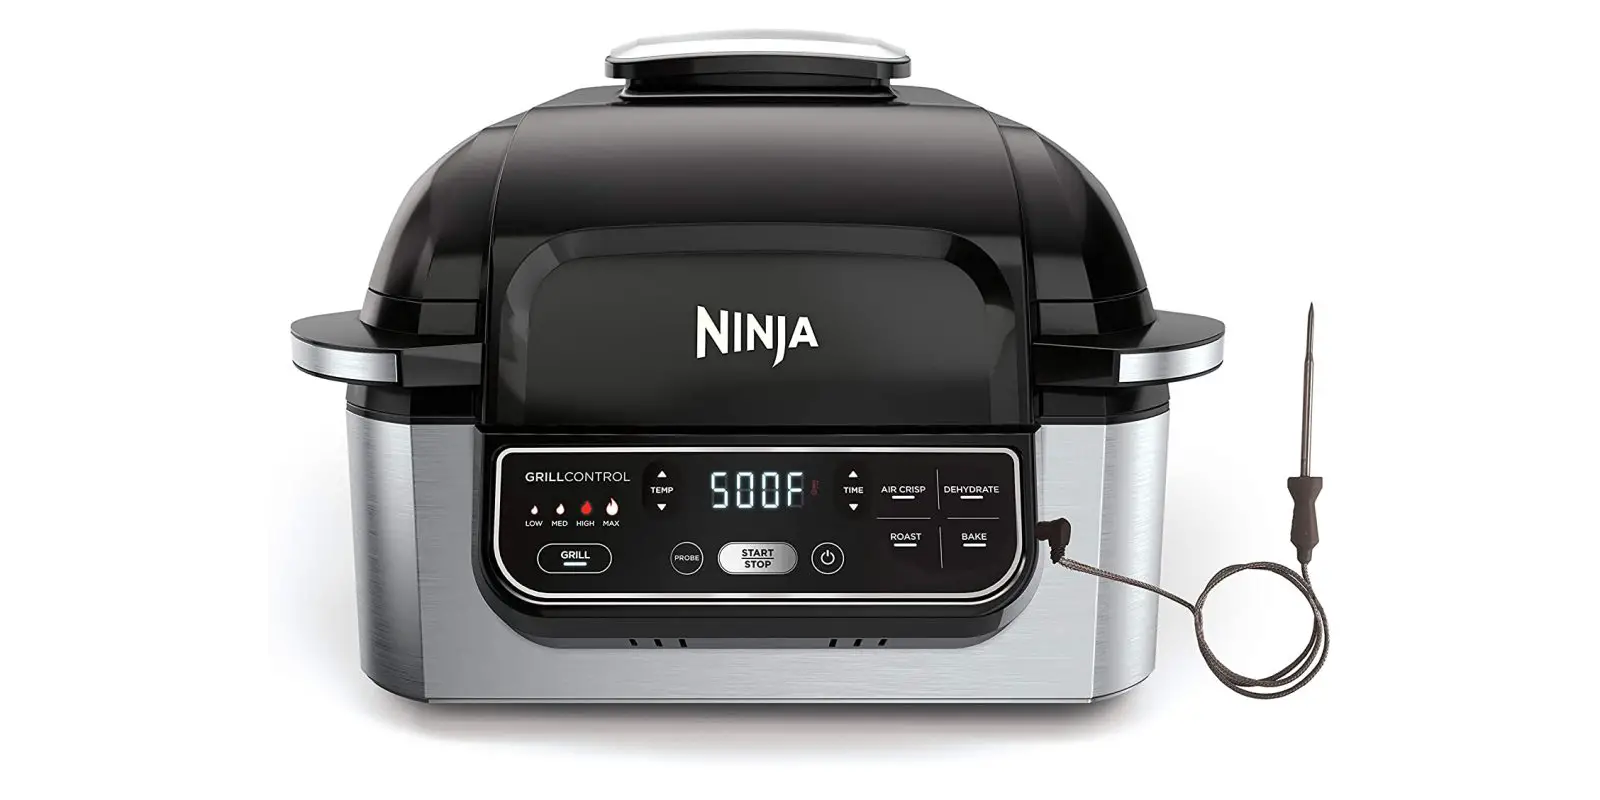 Today only, the Ninja Foodi Pro 5